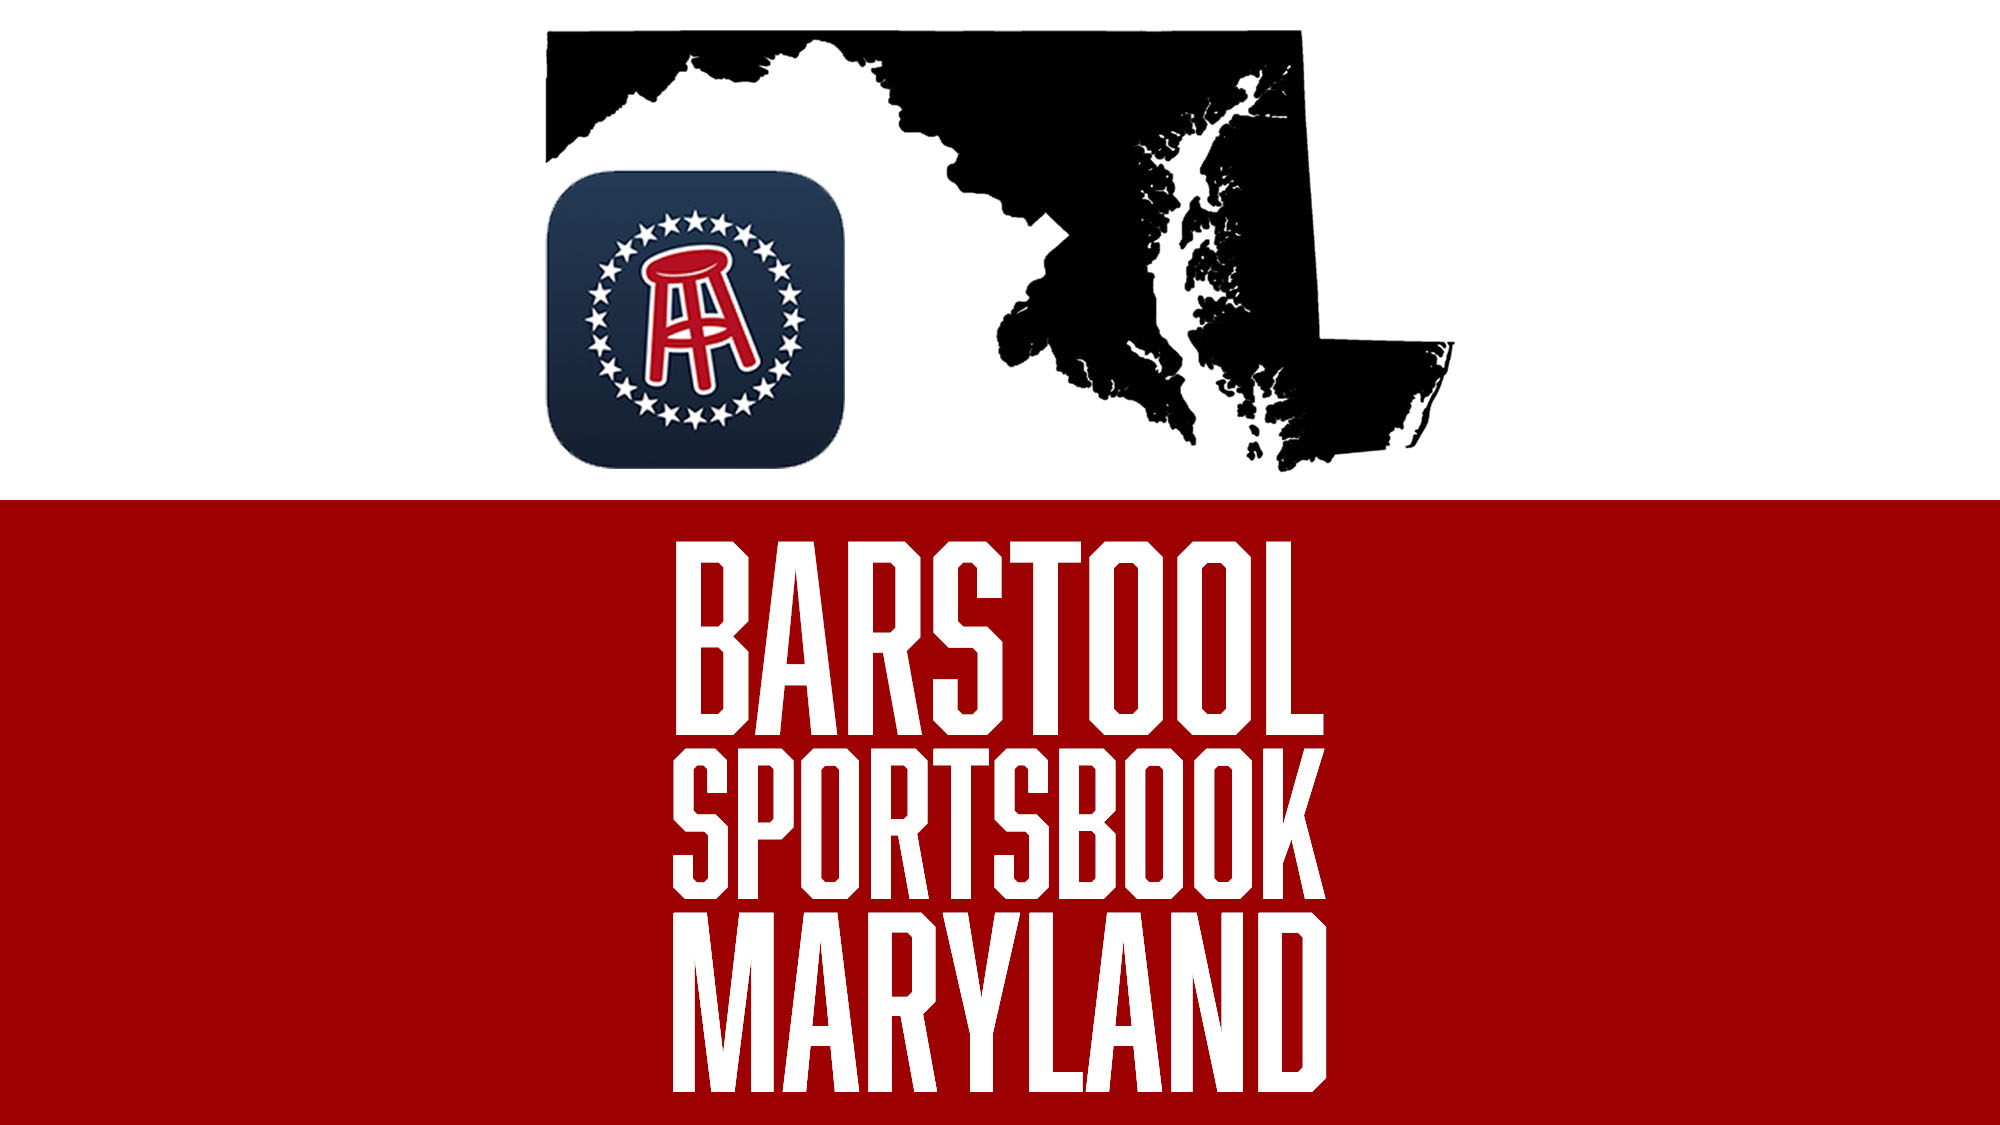 Barstool Sportsbook Maryland